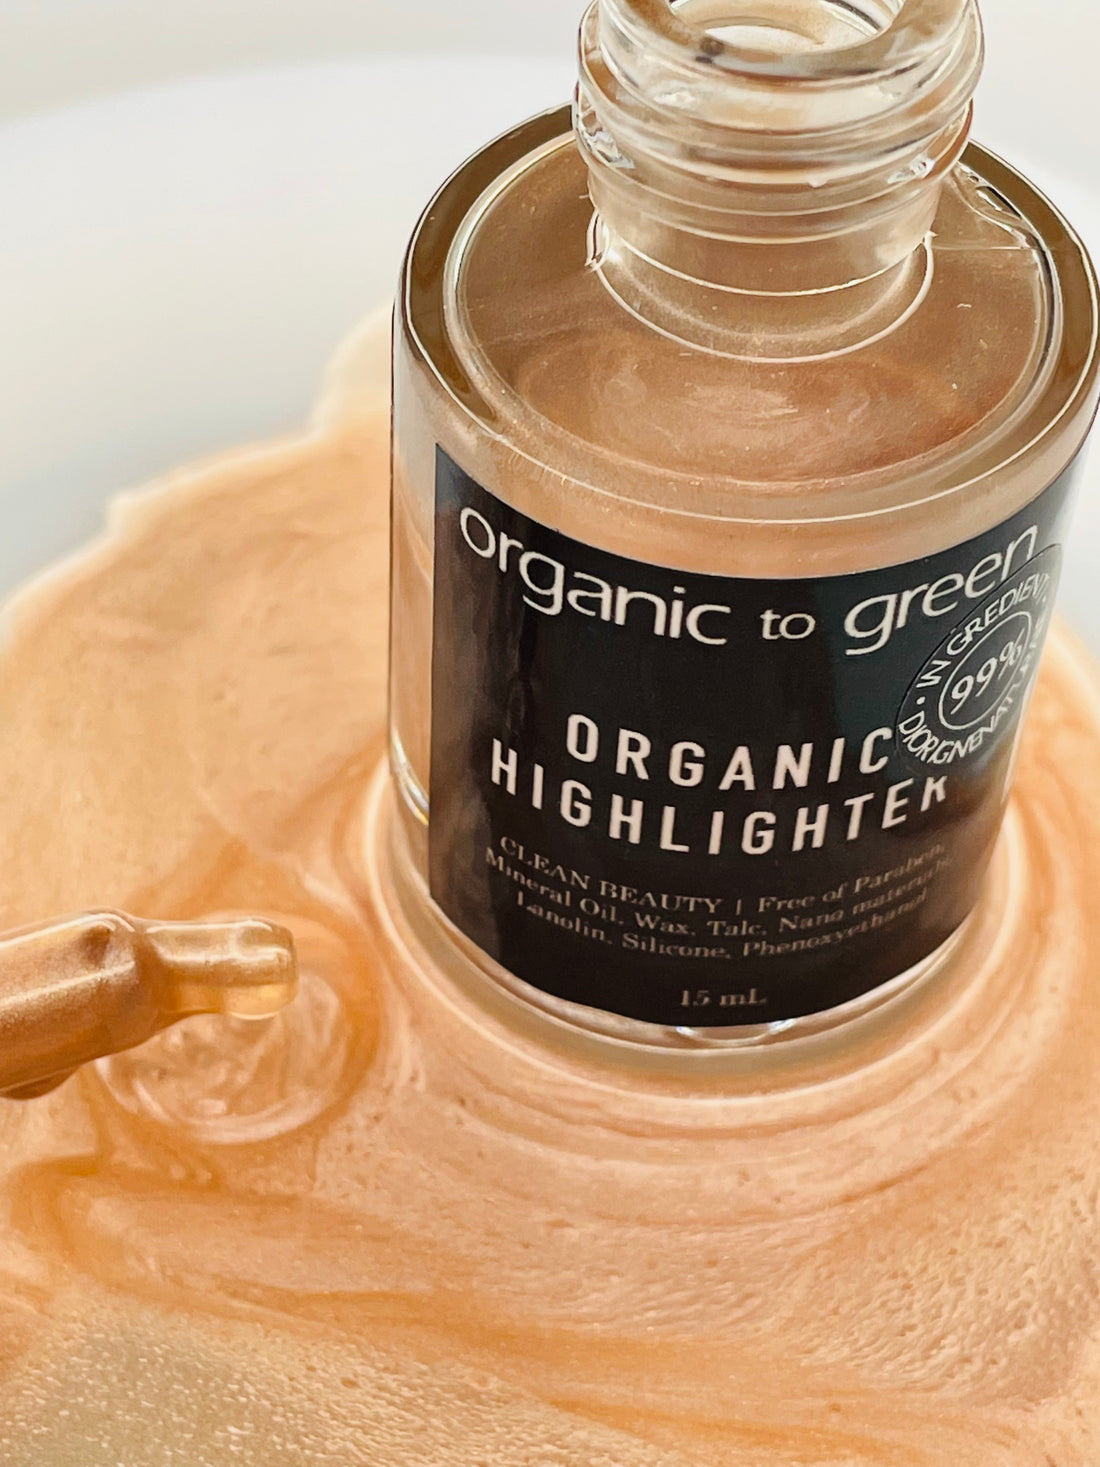 Organic Highlighter